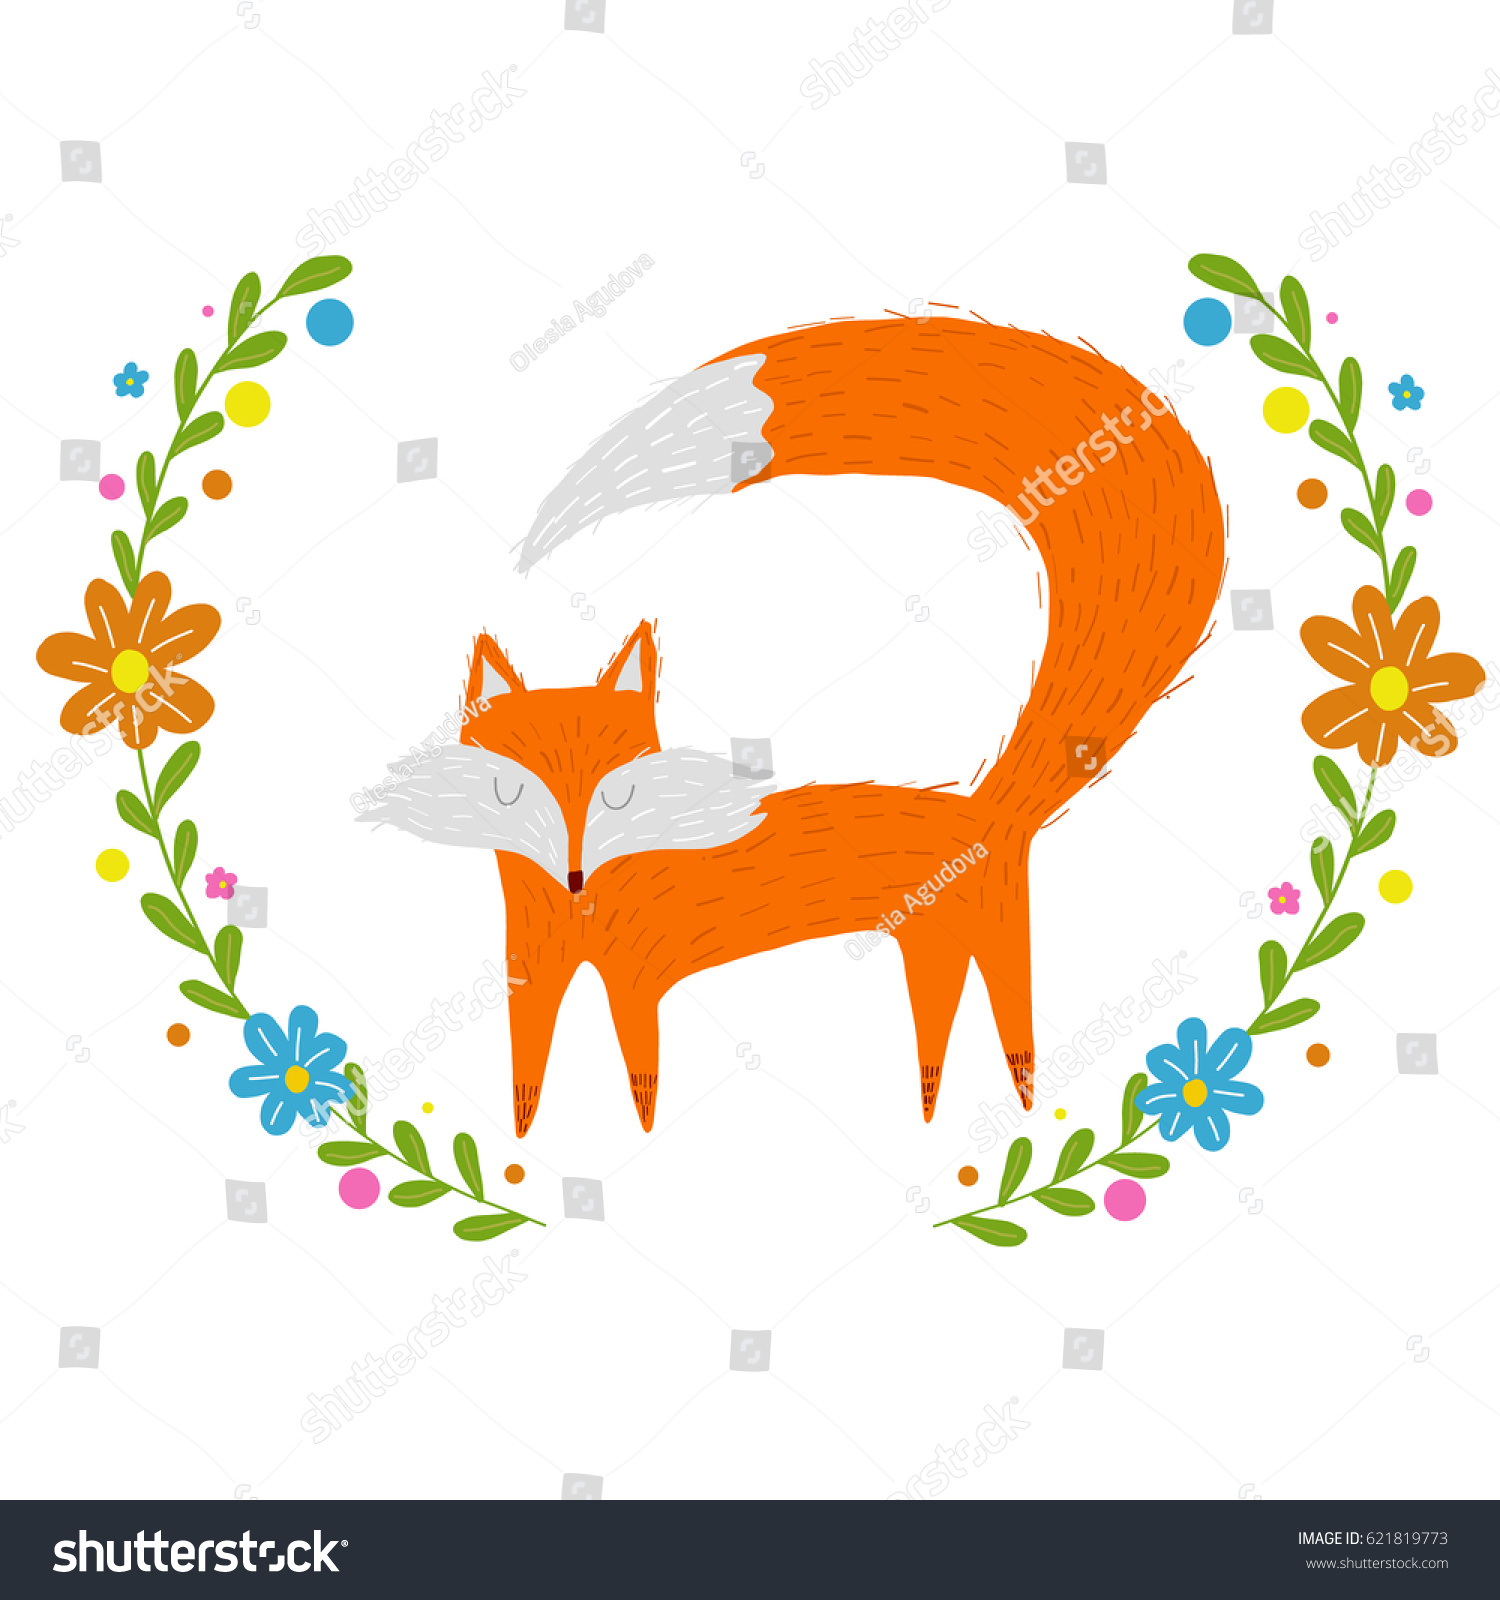 Vector Illustration Cute Fox Flowers Cartoon Stock Vector Royalty Free 621819773 Shutterstock 2617